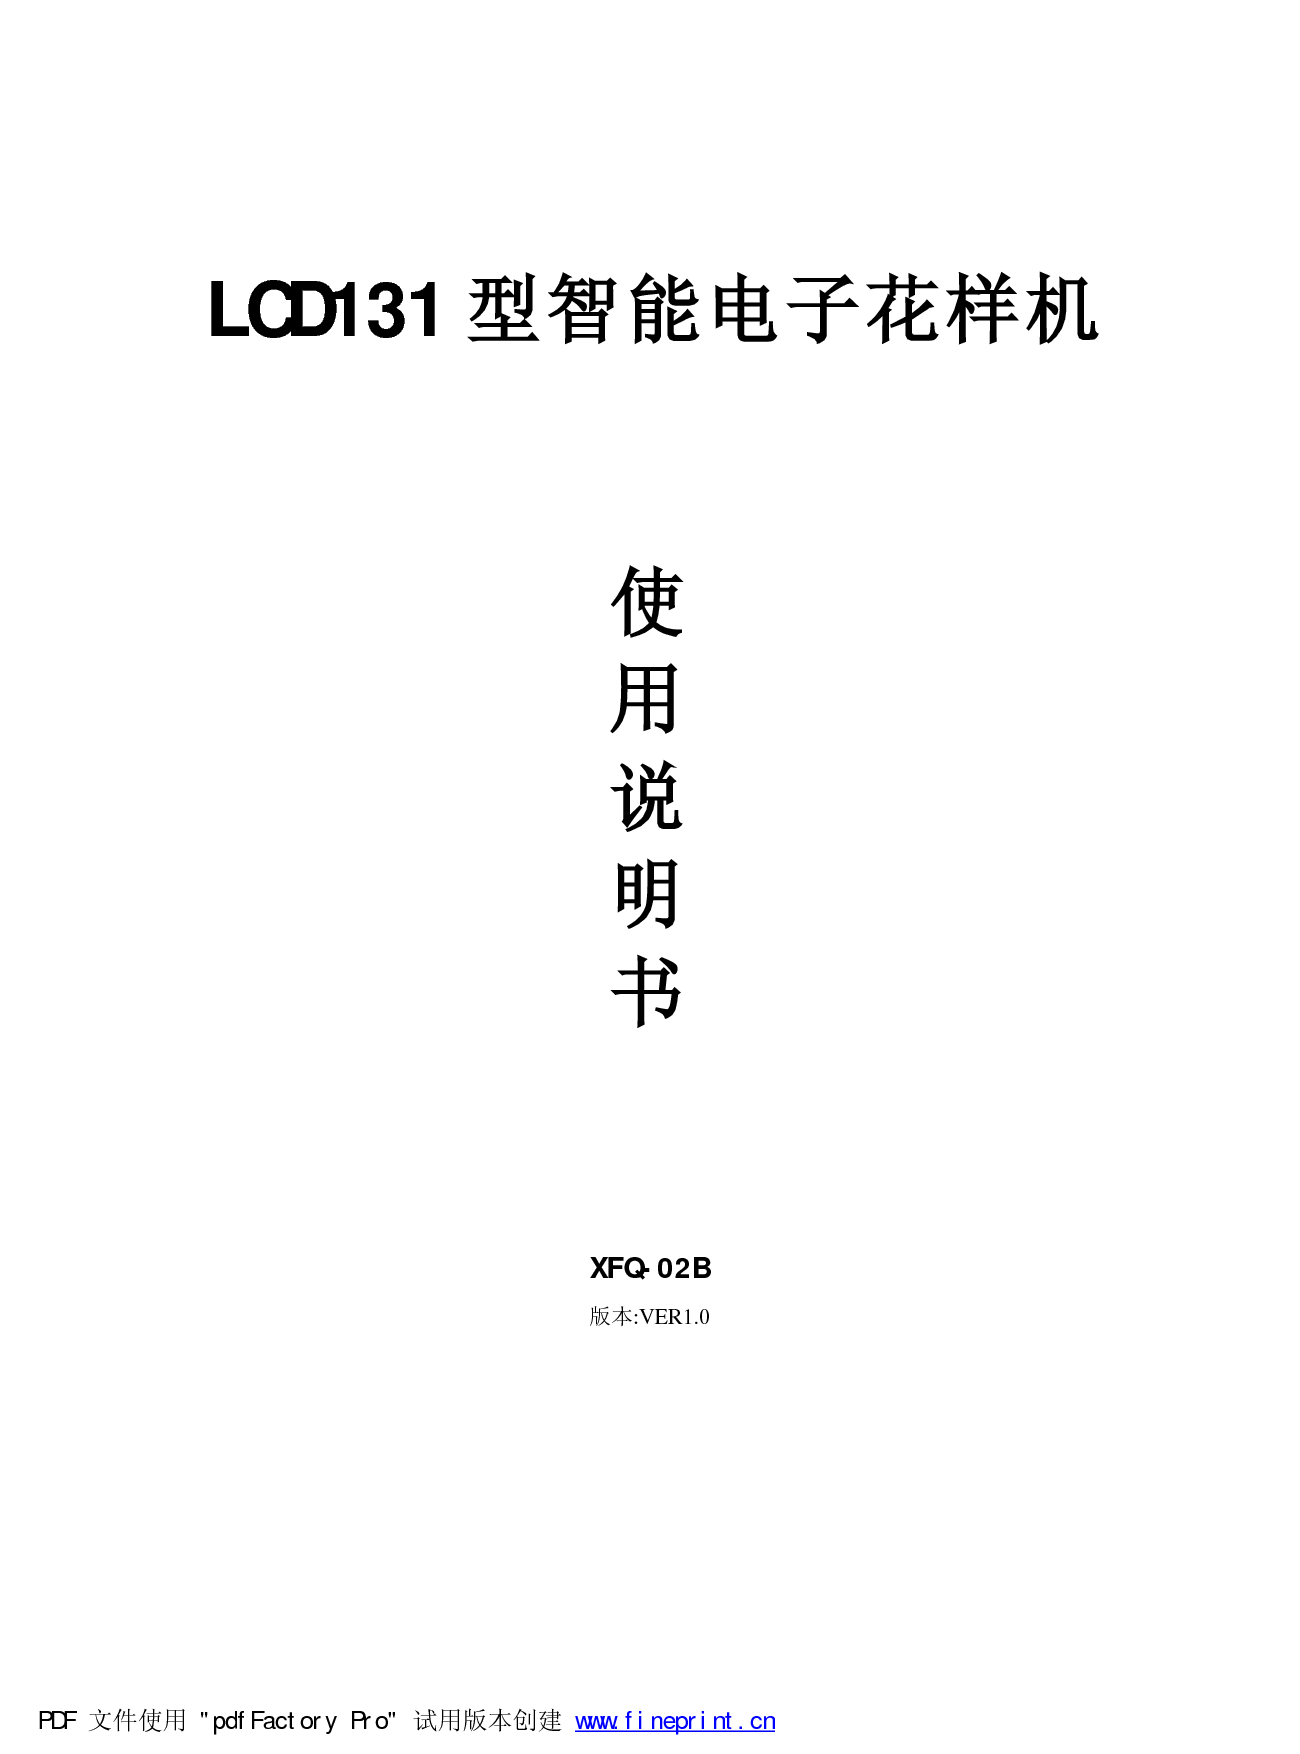 标准 Typical LCD131, XFQ-02B 使用说明书 封面